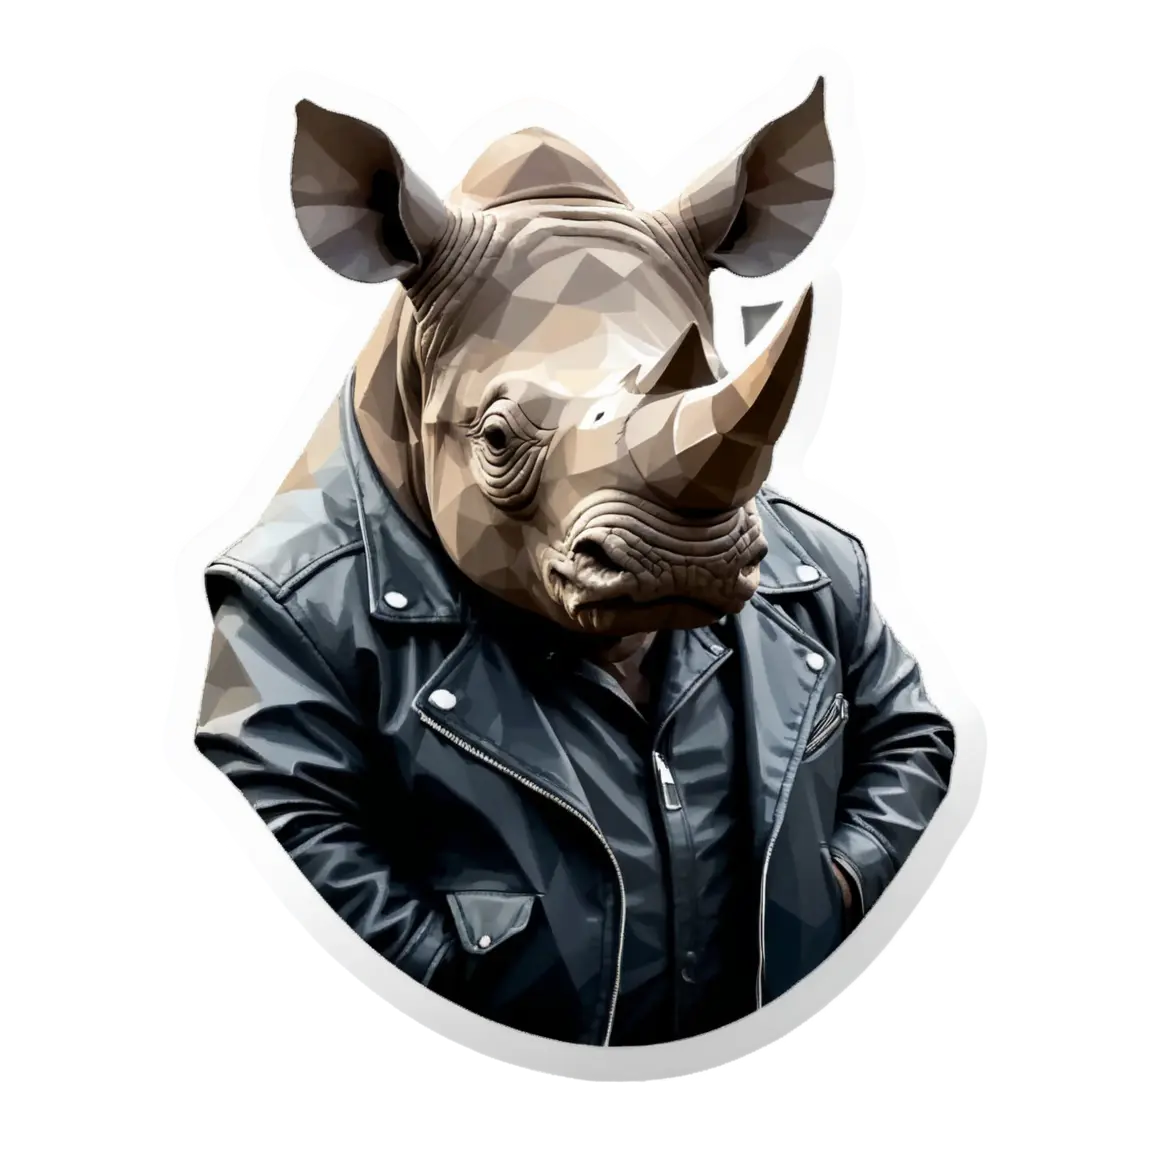 a cool looking rhino wearing black leather jacket, polygonal art style